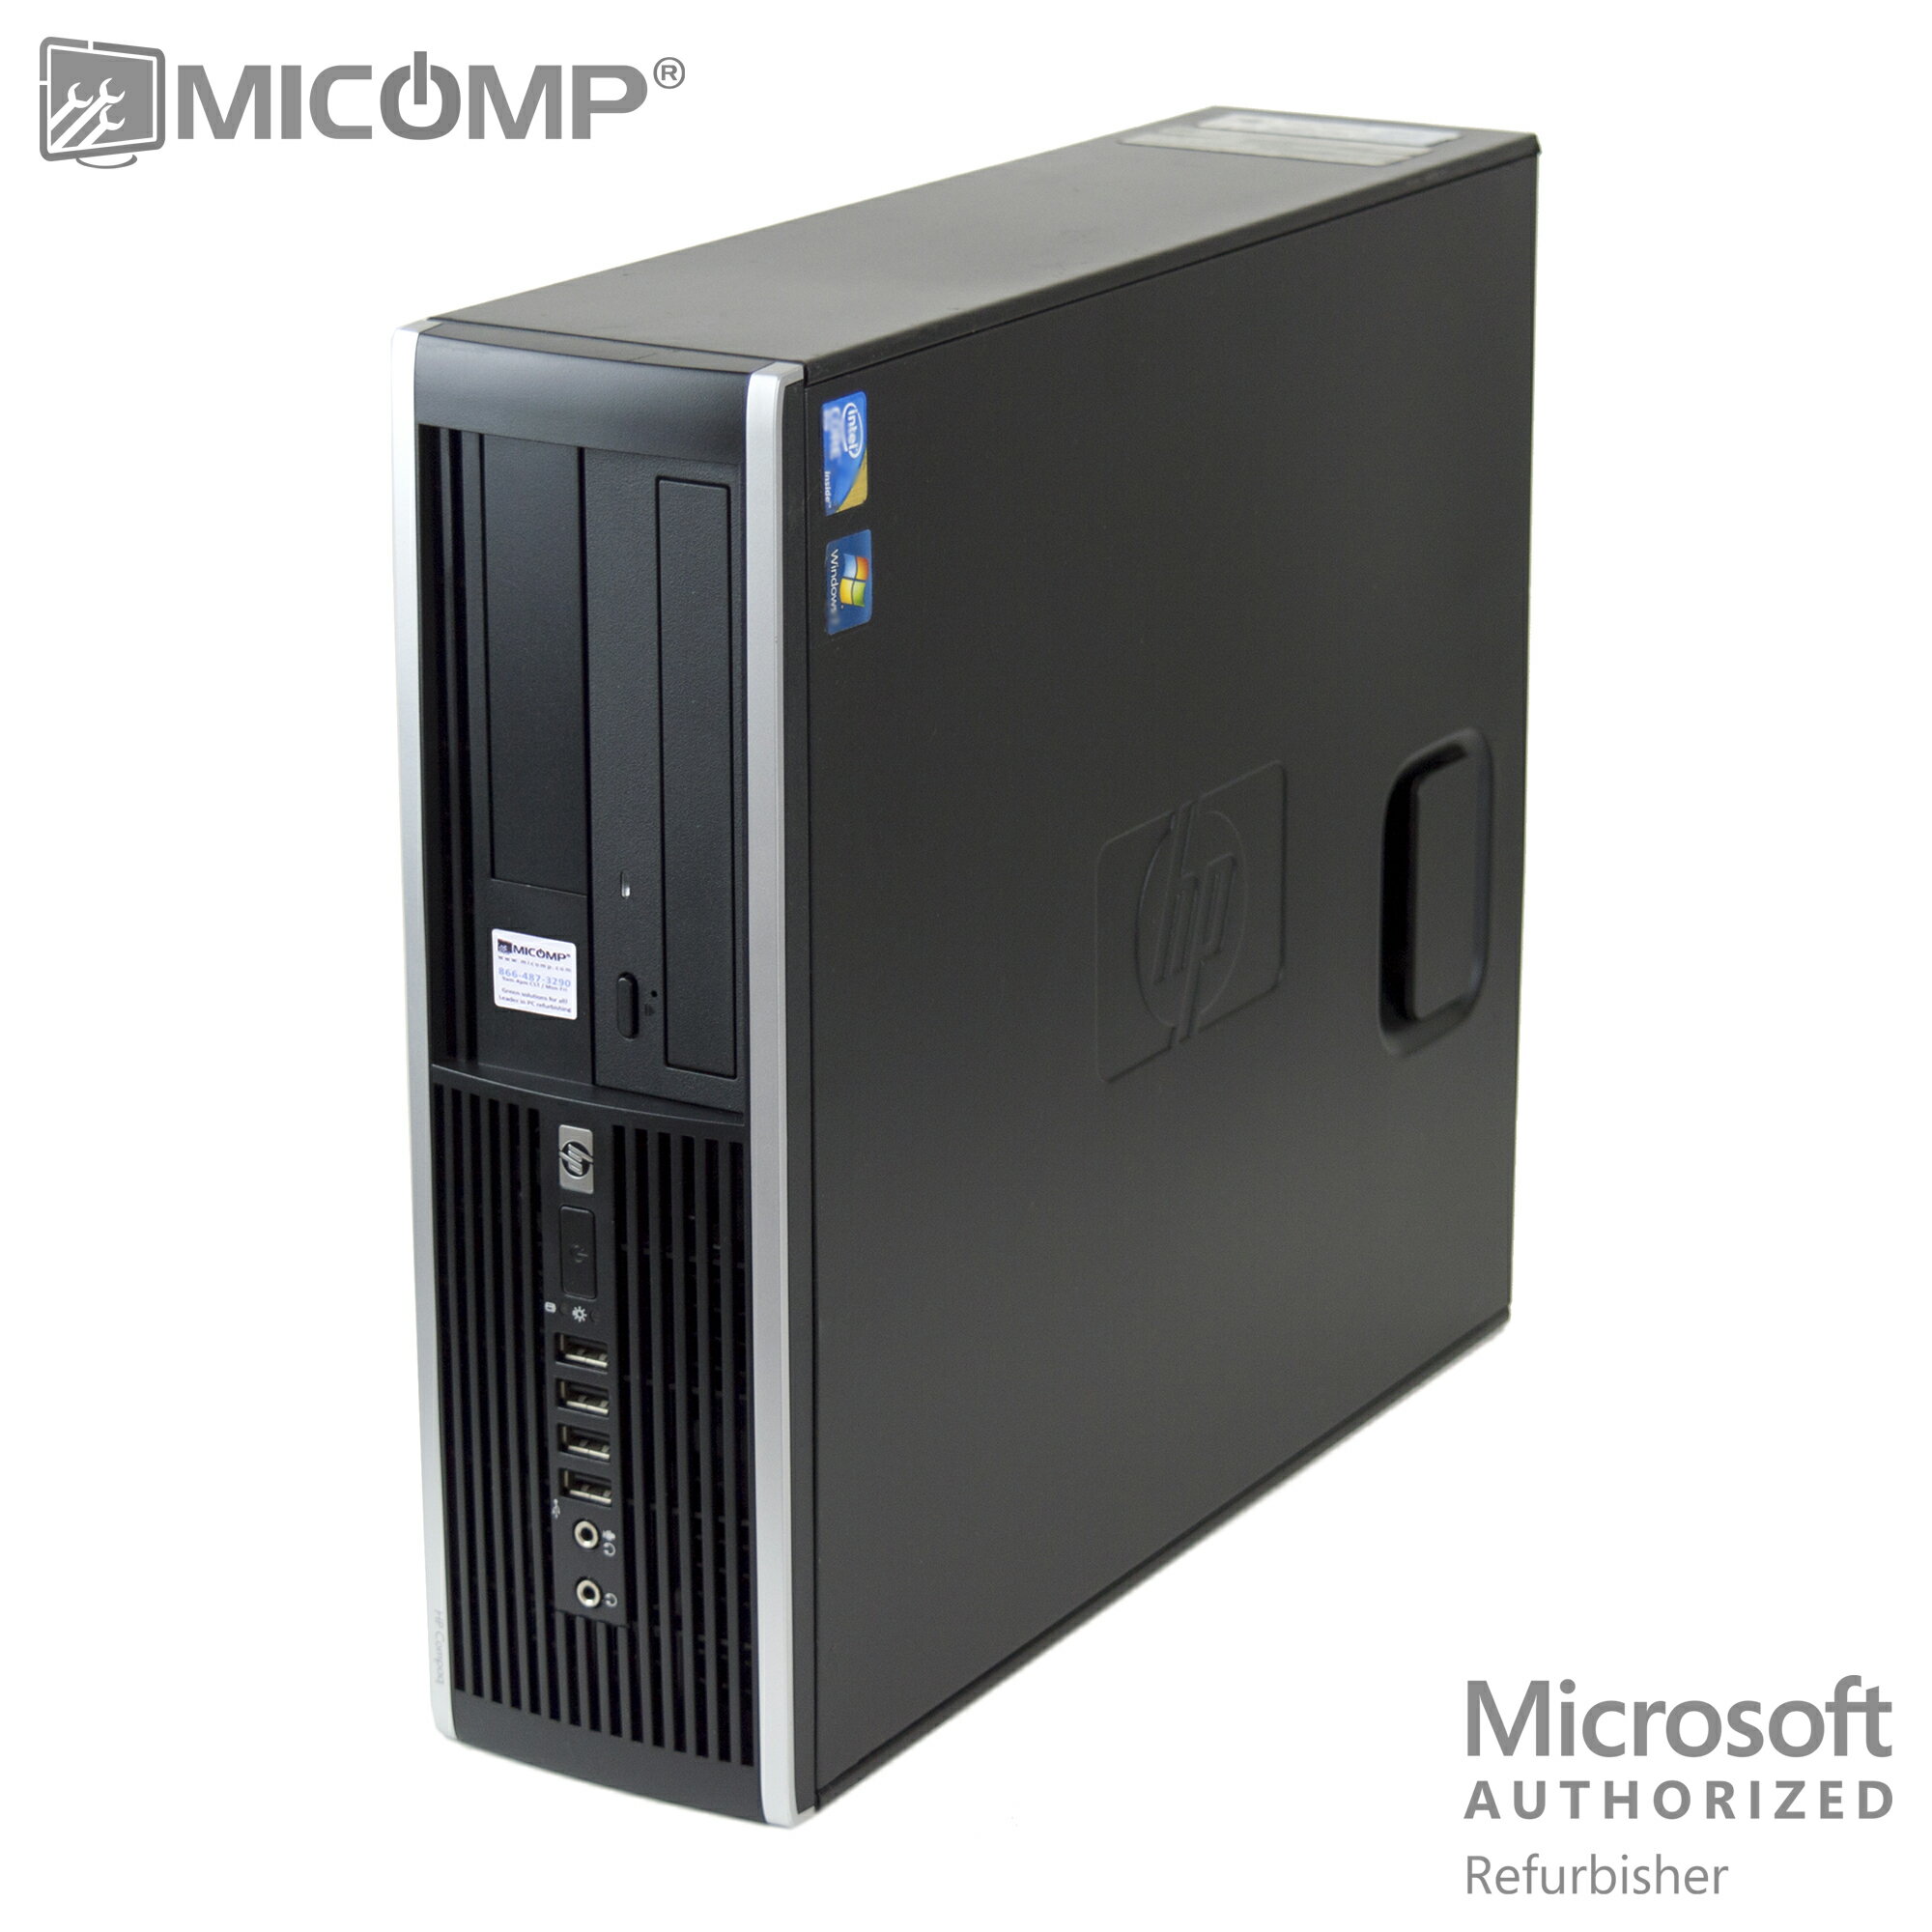 MICOMP: Hp Elite 8200 Windows 10 PC with 2 LCD Monitors Quad Core i5